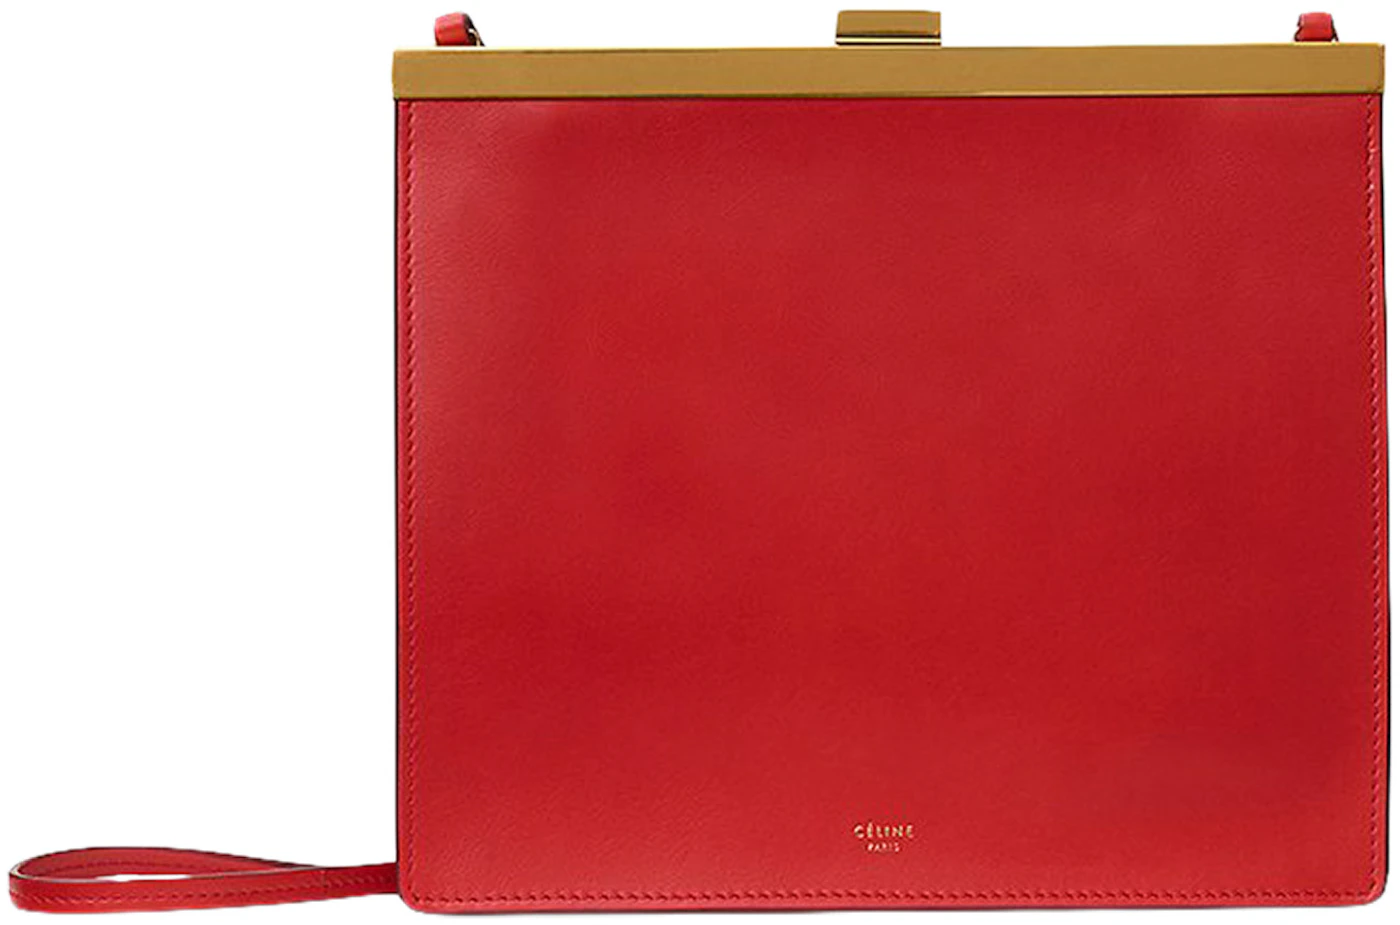 Celine Clasp Shoulder Bag Mini Scarlet in Calfskin Leather with Gold ...